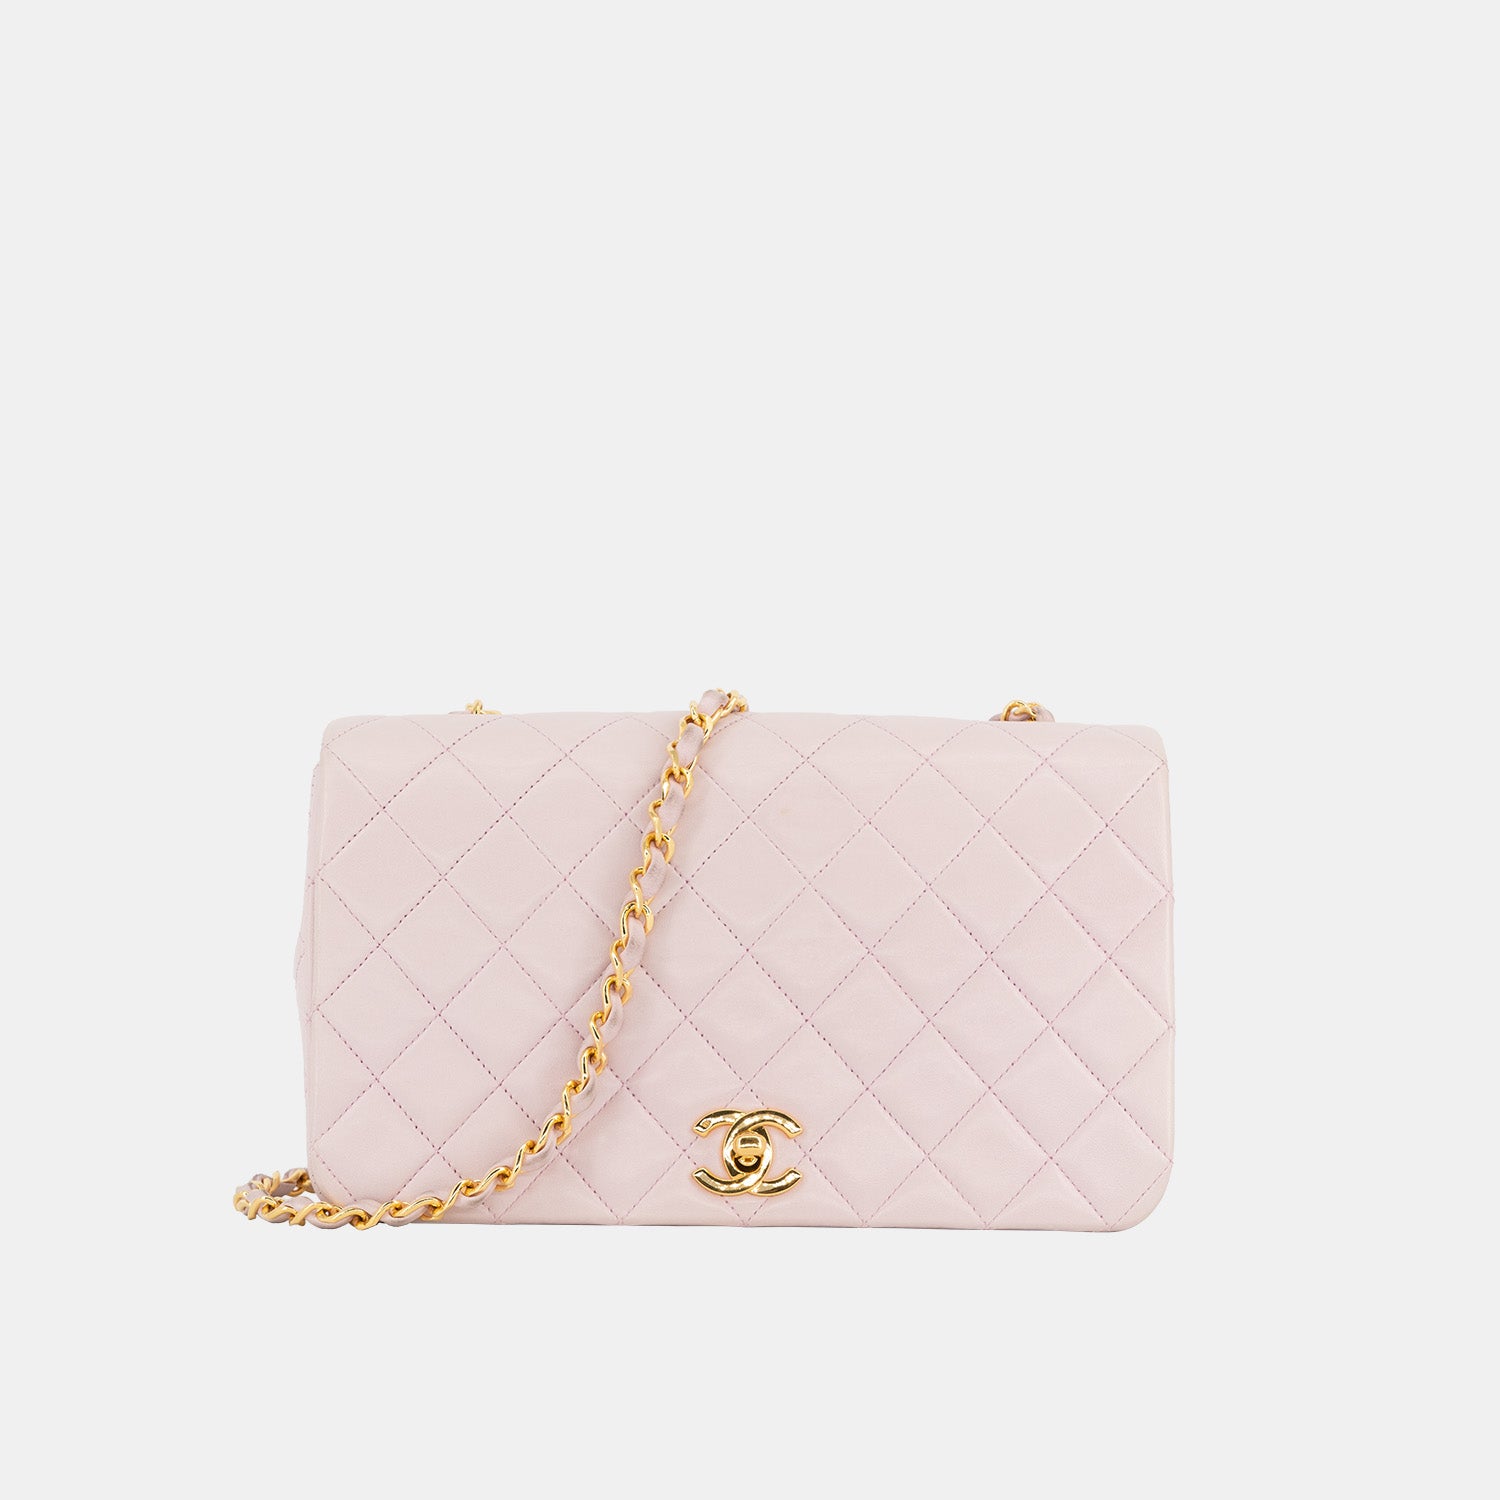 Chanel Vintage Pink 20cm Mini Flag Bag in 24k GHW, Women's Fashion